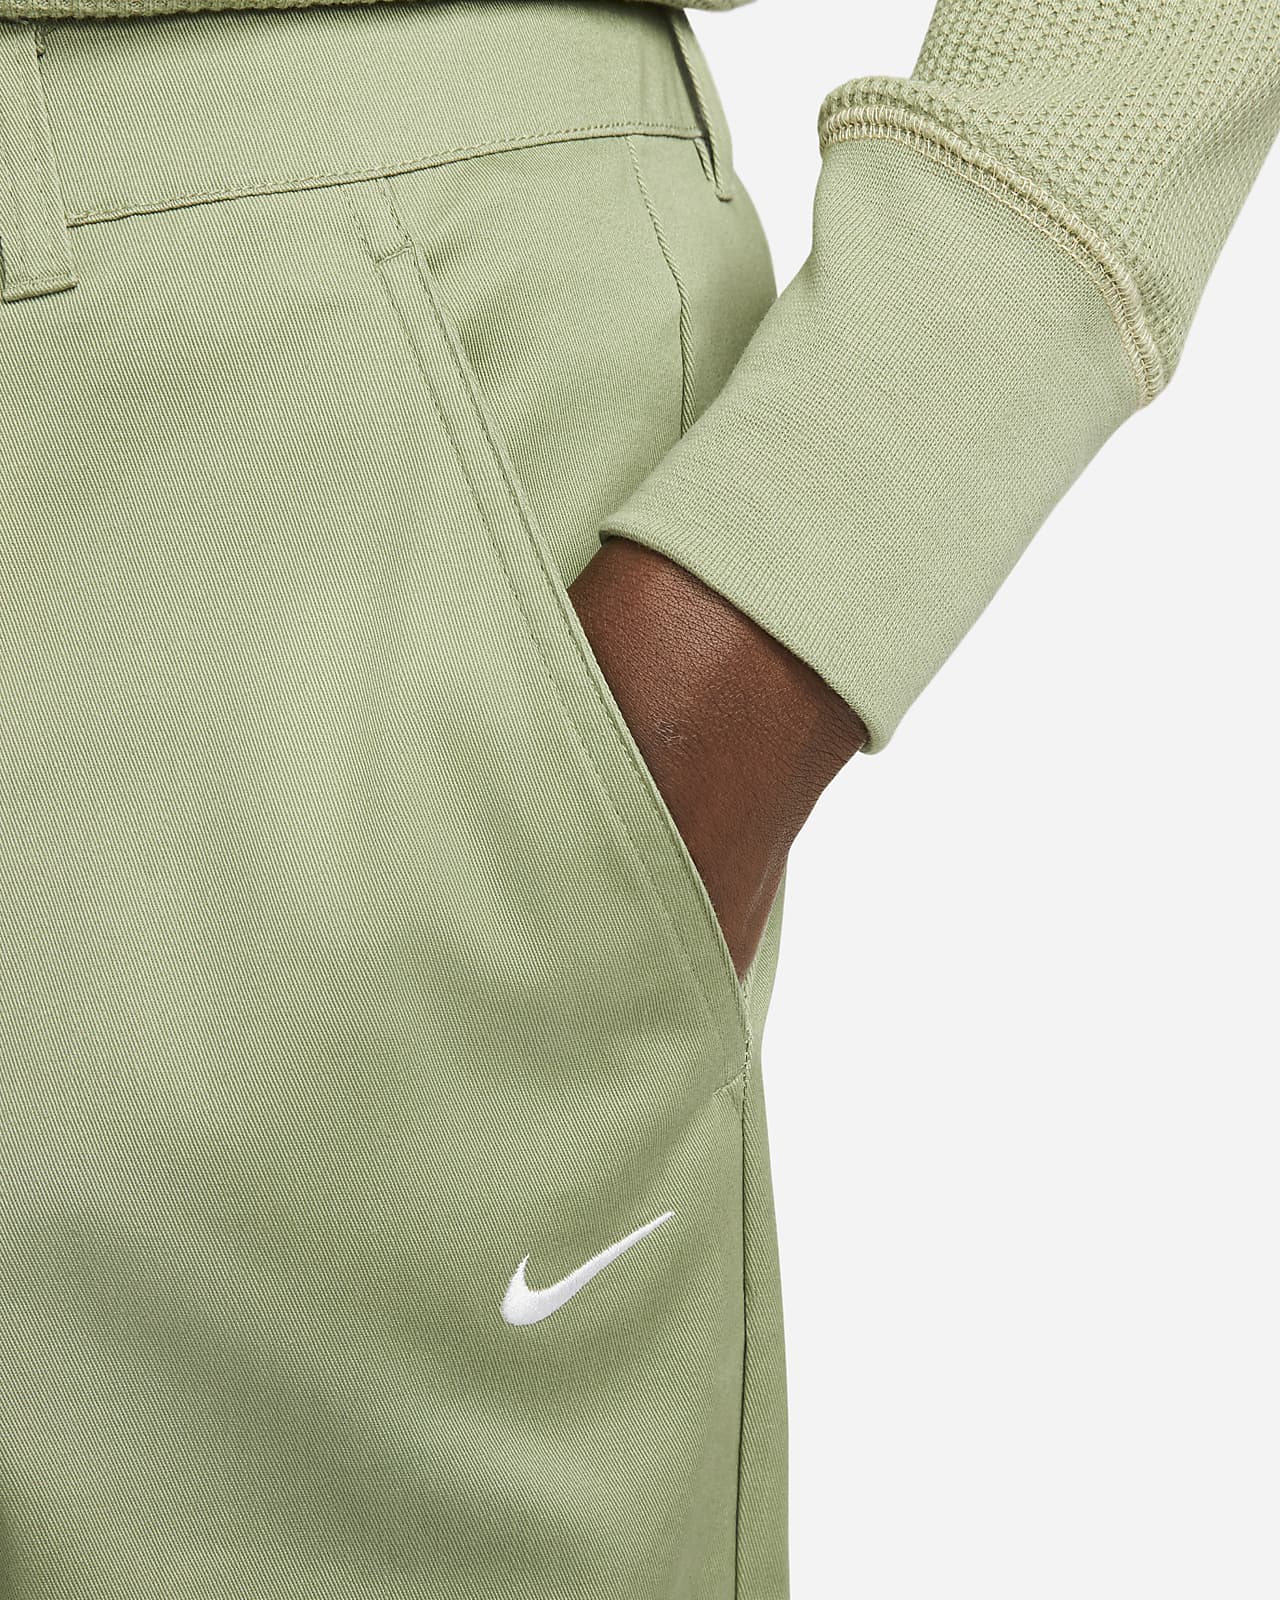 Nike Life El Chino Pants in Green for Men